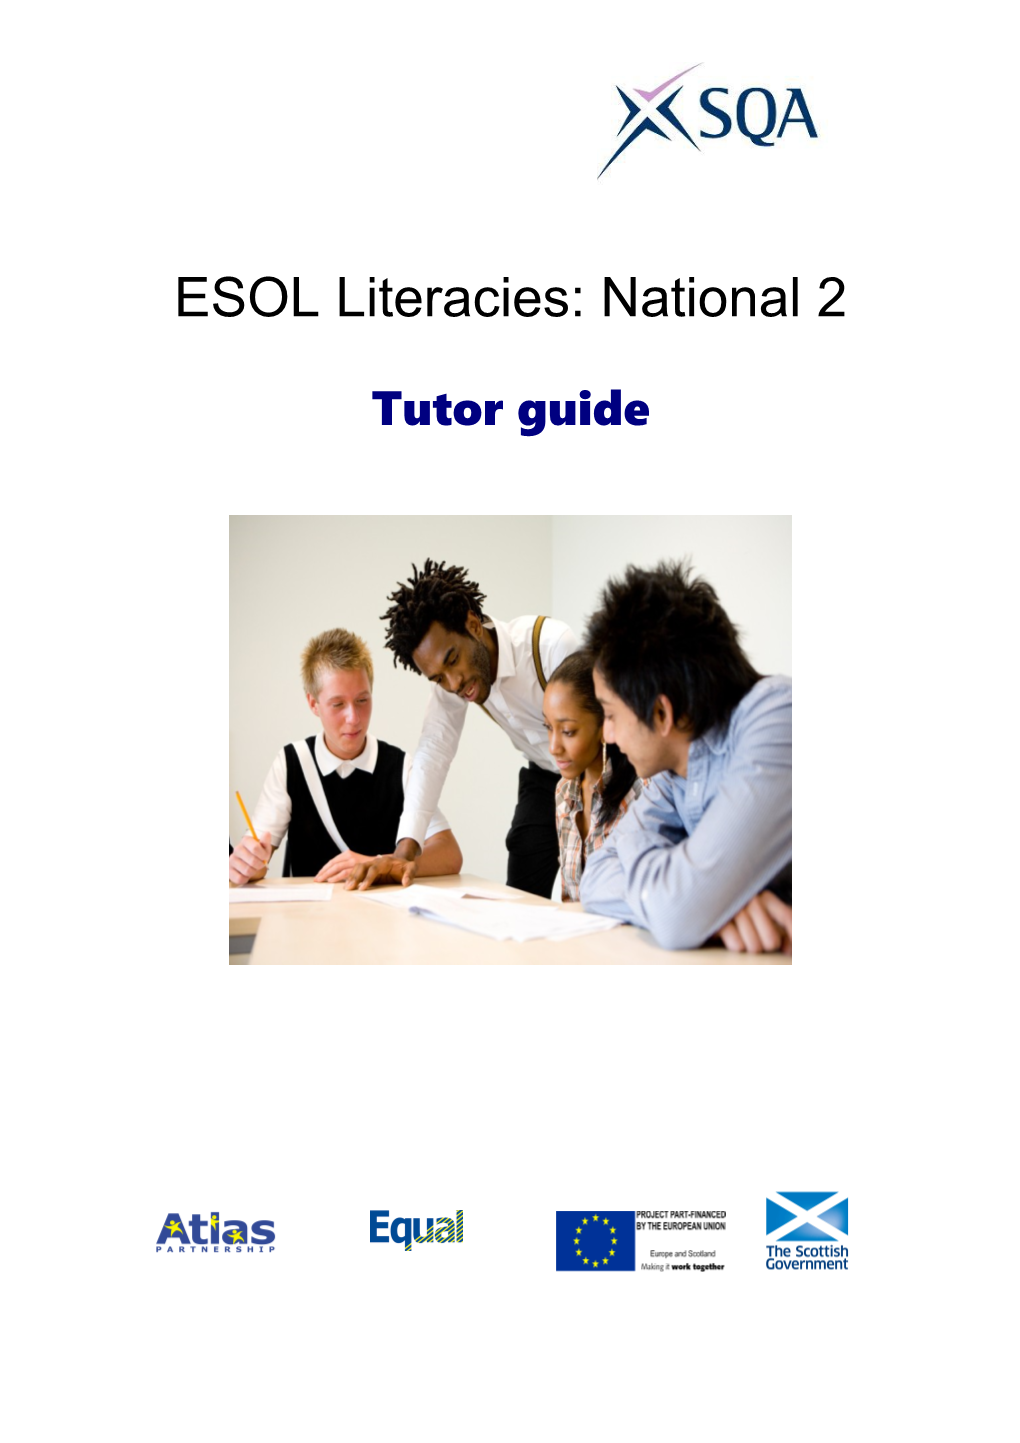 ESOL Literacies Learning Materials